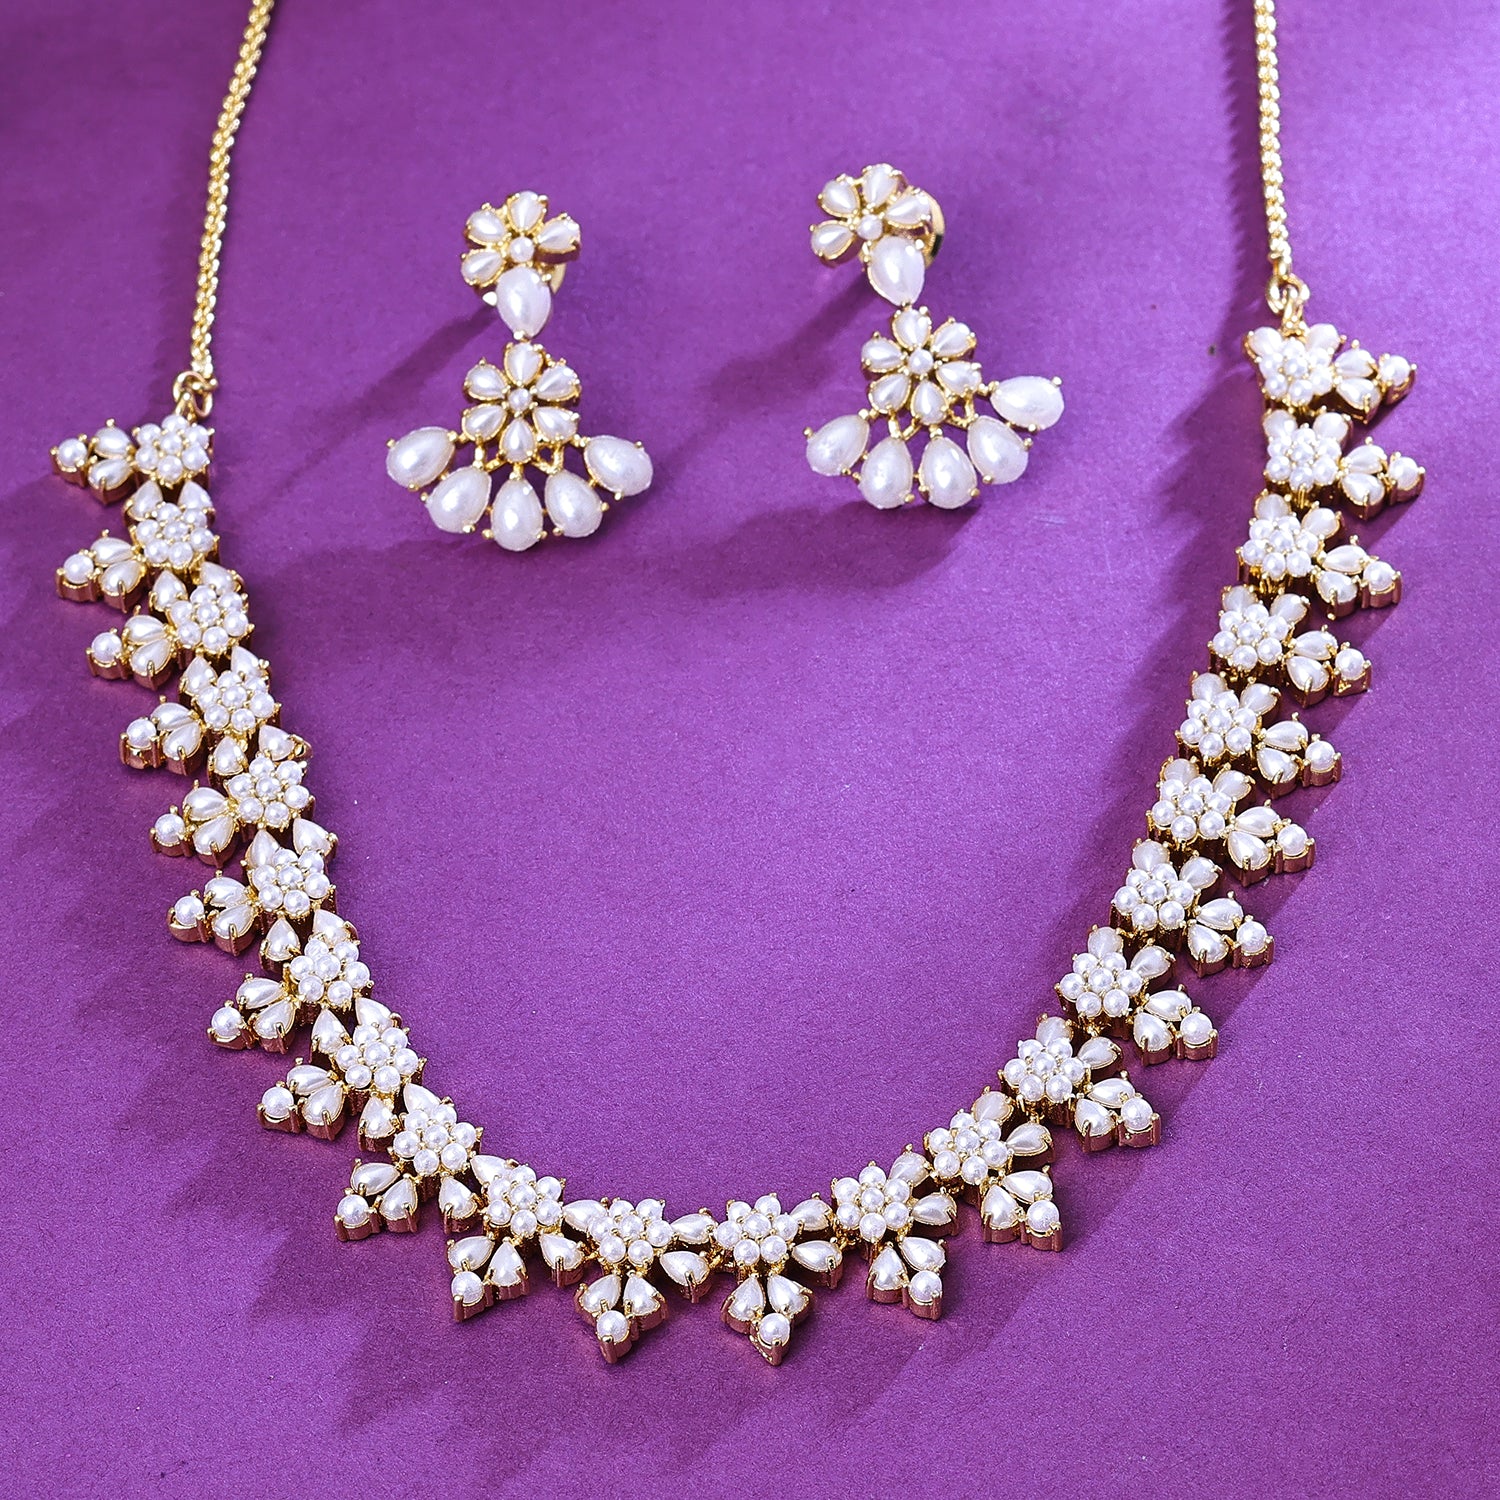 Swarovski Symbolic necklace, Set (2), Moon and star, Black, Rose gold-tone  plated